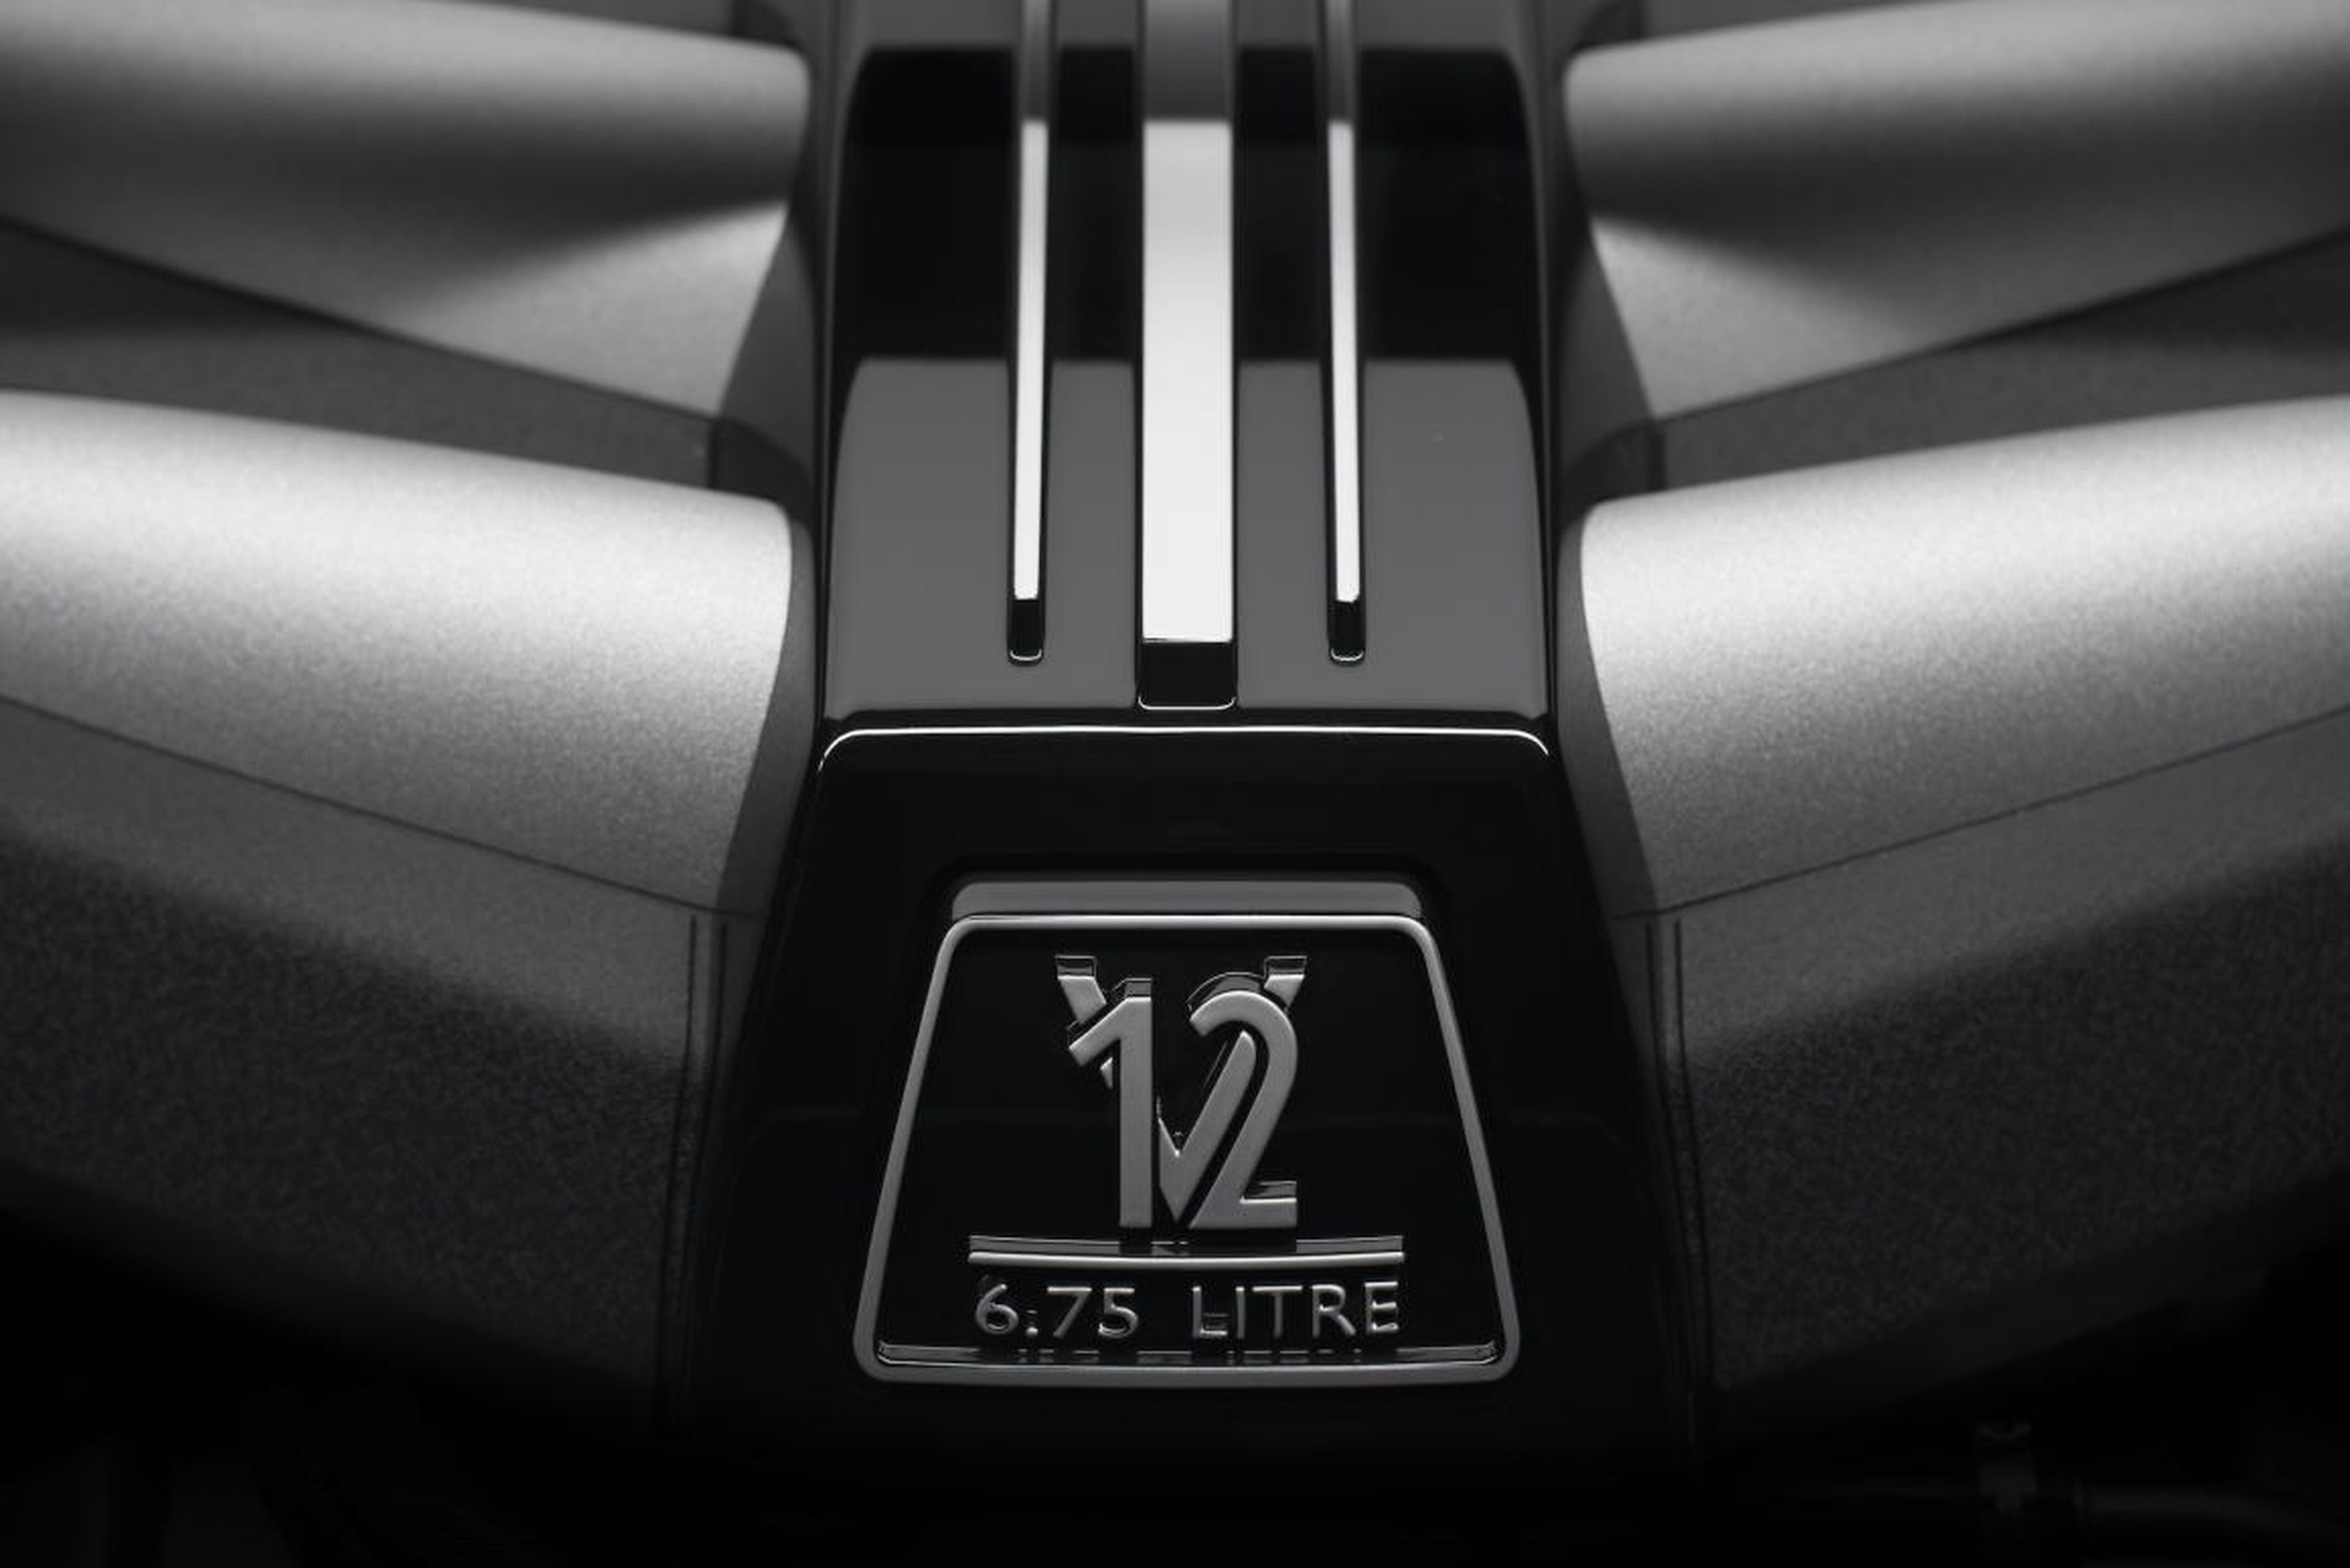 Under the hood, is Rolls-Royce's new 563 horsepower, 6.75-liter, twin-turbocharged V12.